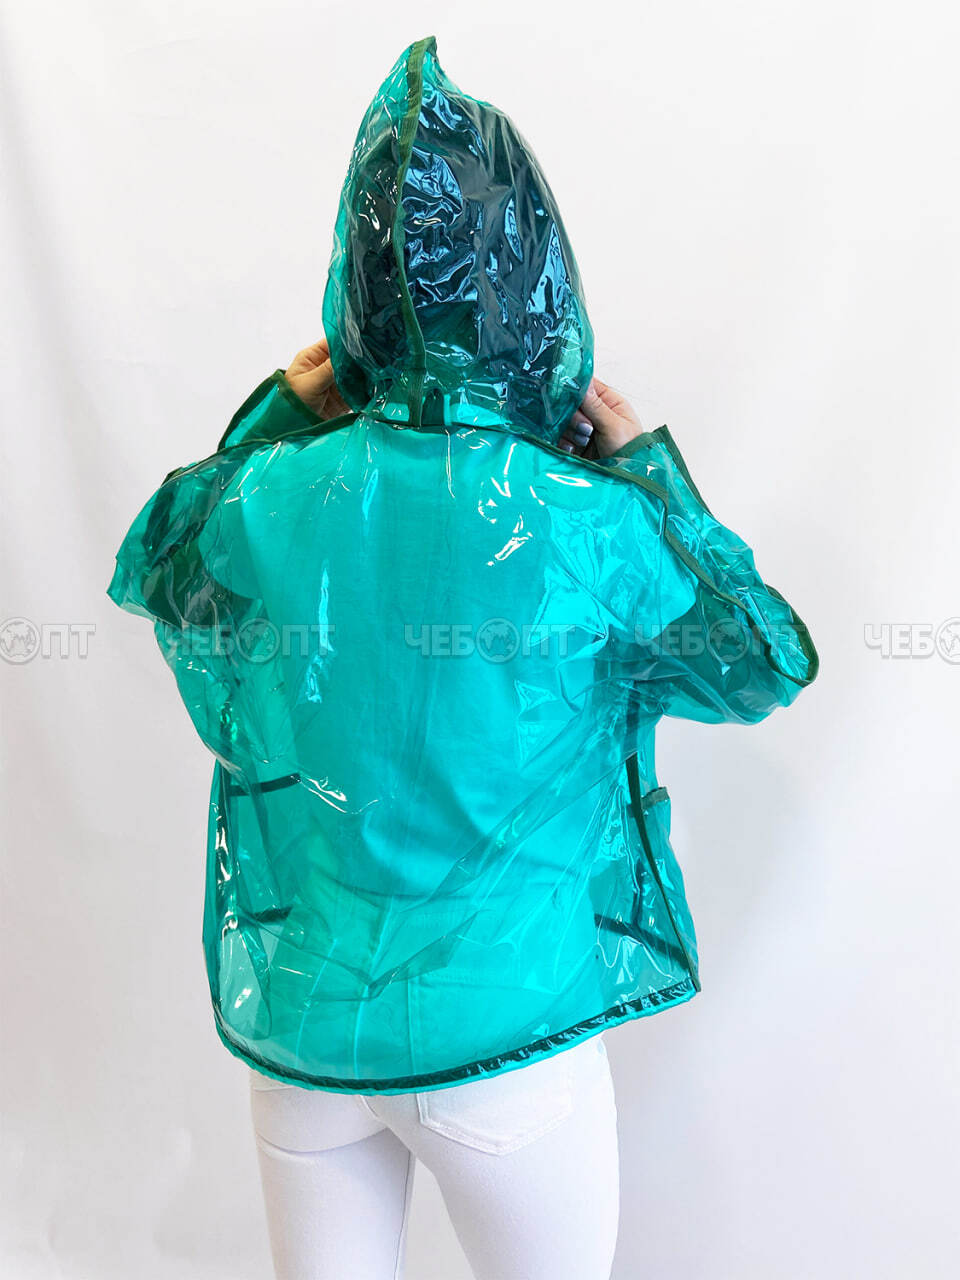 Куртка дождевик на молнии,ЧЕБПРО,цветная пленка, размер 40-44,100% пленка ПВХ, Арт.КурПЛЕНКА/зеленый, МПС [3/15] СобПр. ЧЕБОПТ.